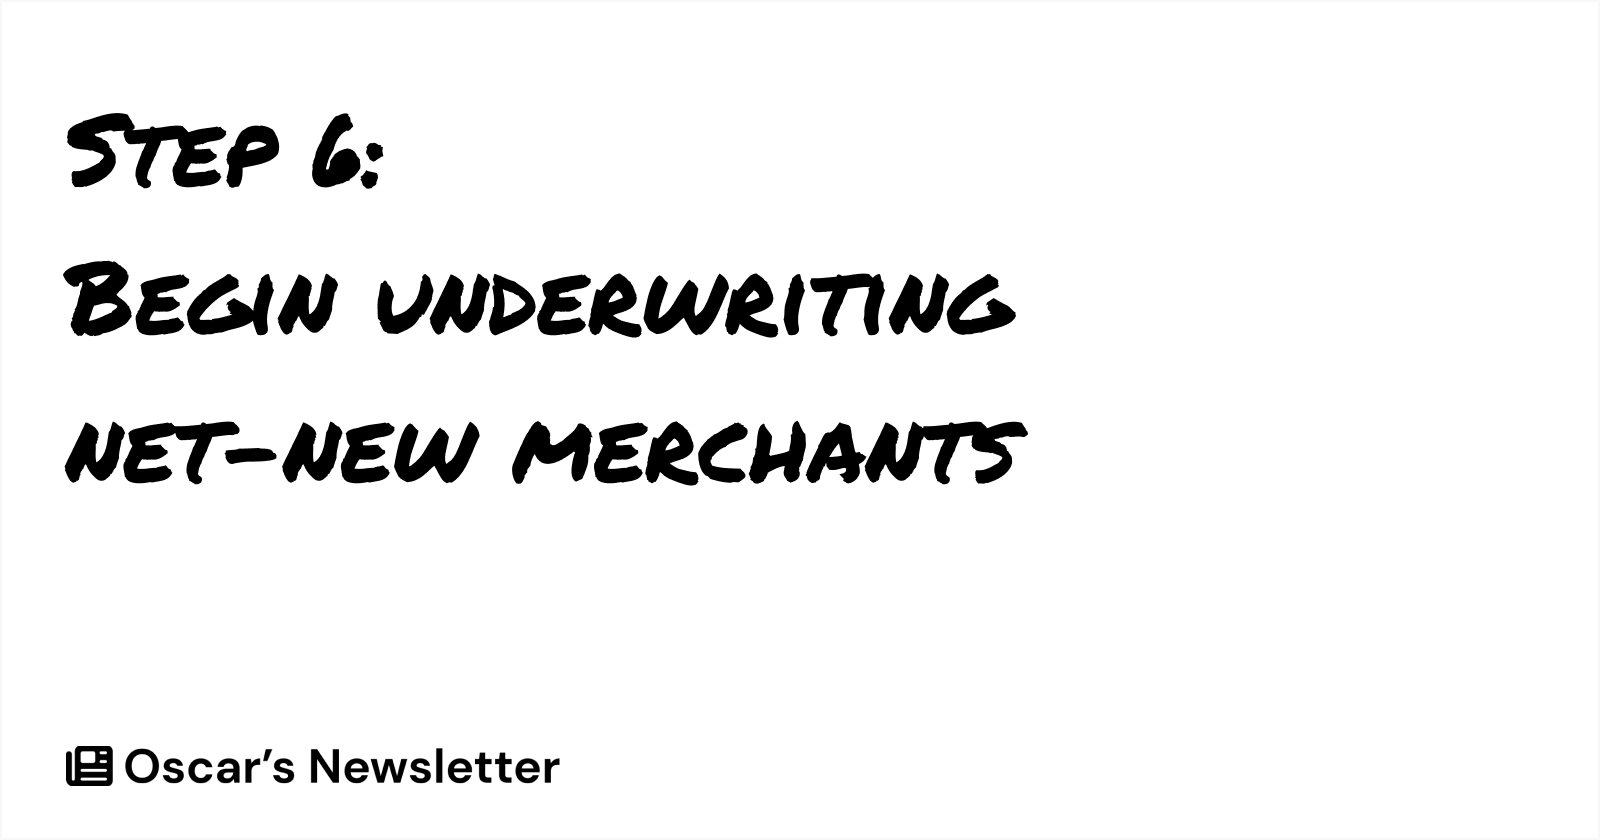 Step 6: Begin Underwriting Net-New Merchants